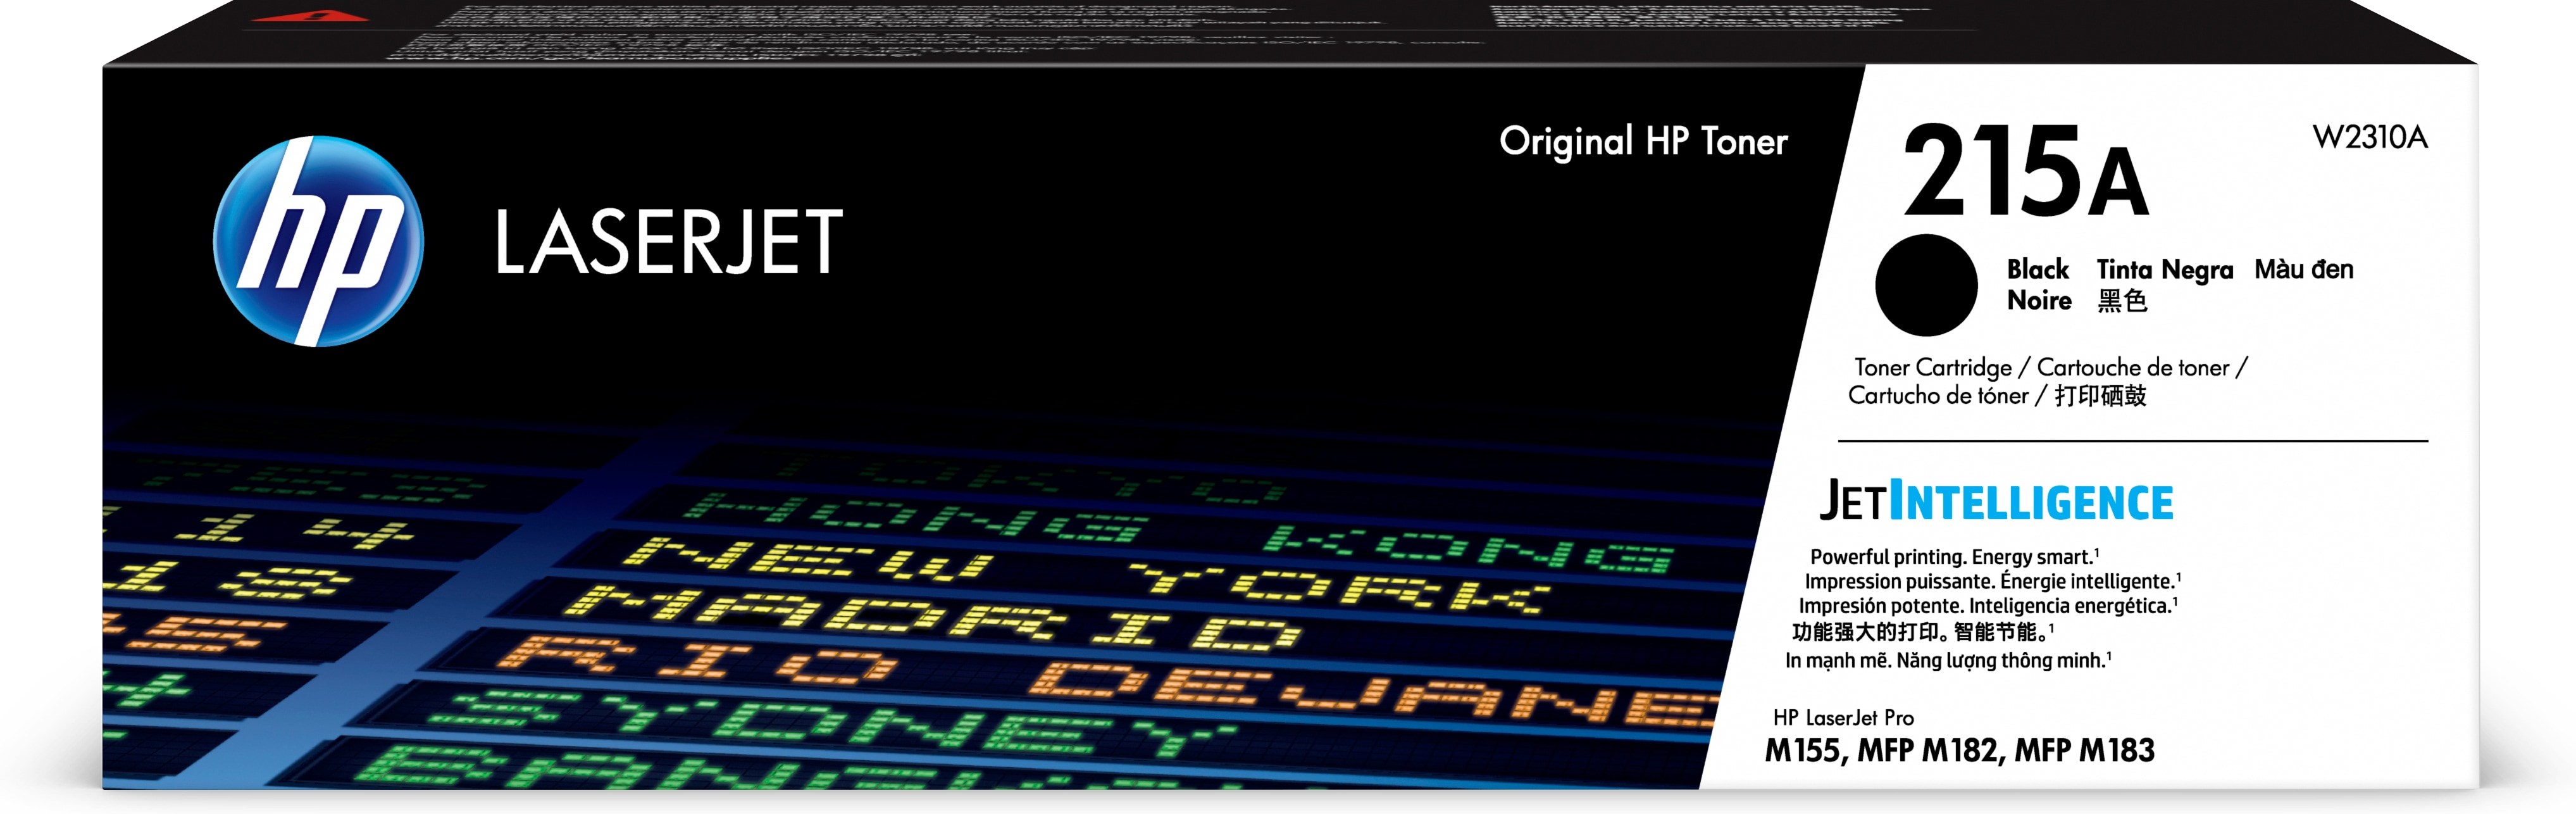 HP Cartucho de Tóner Original LaserJet 215A negro